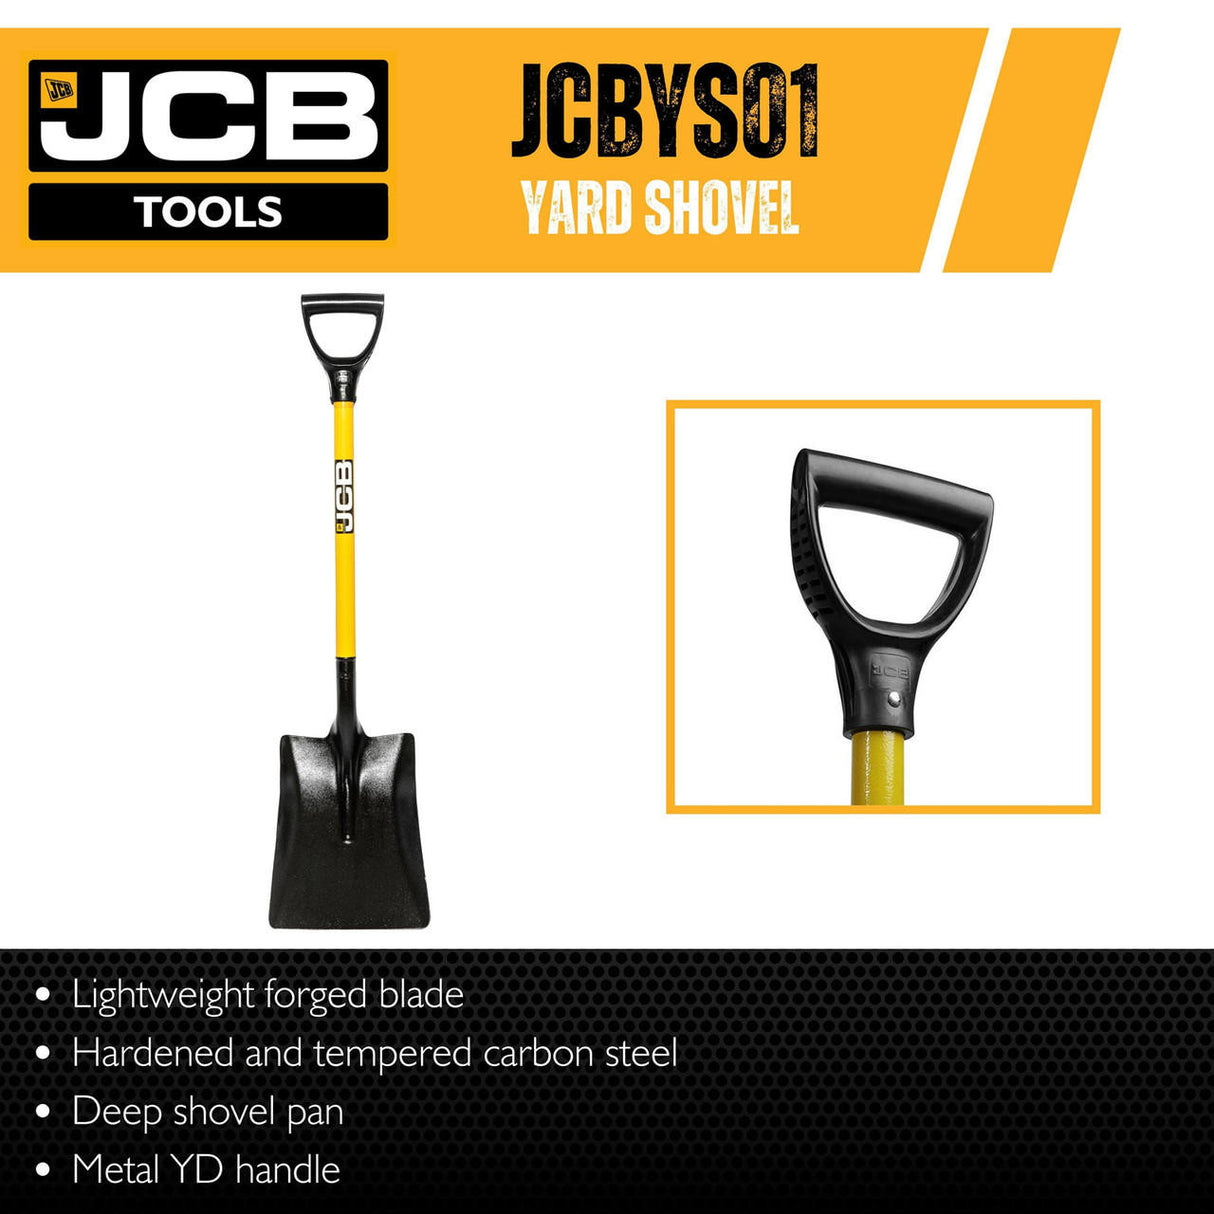 jcb tools JCB Professional Square Open Socket Yard Shovel | JCBYS01